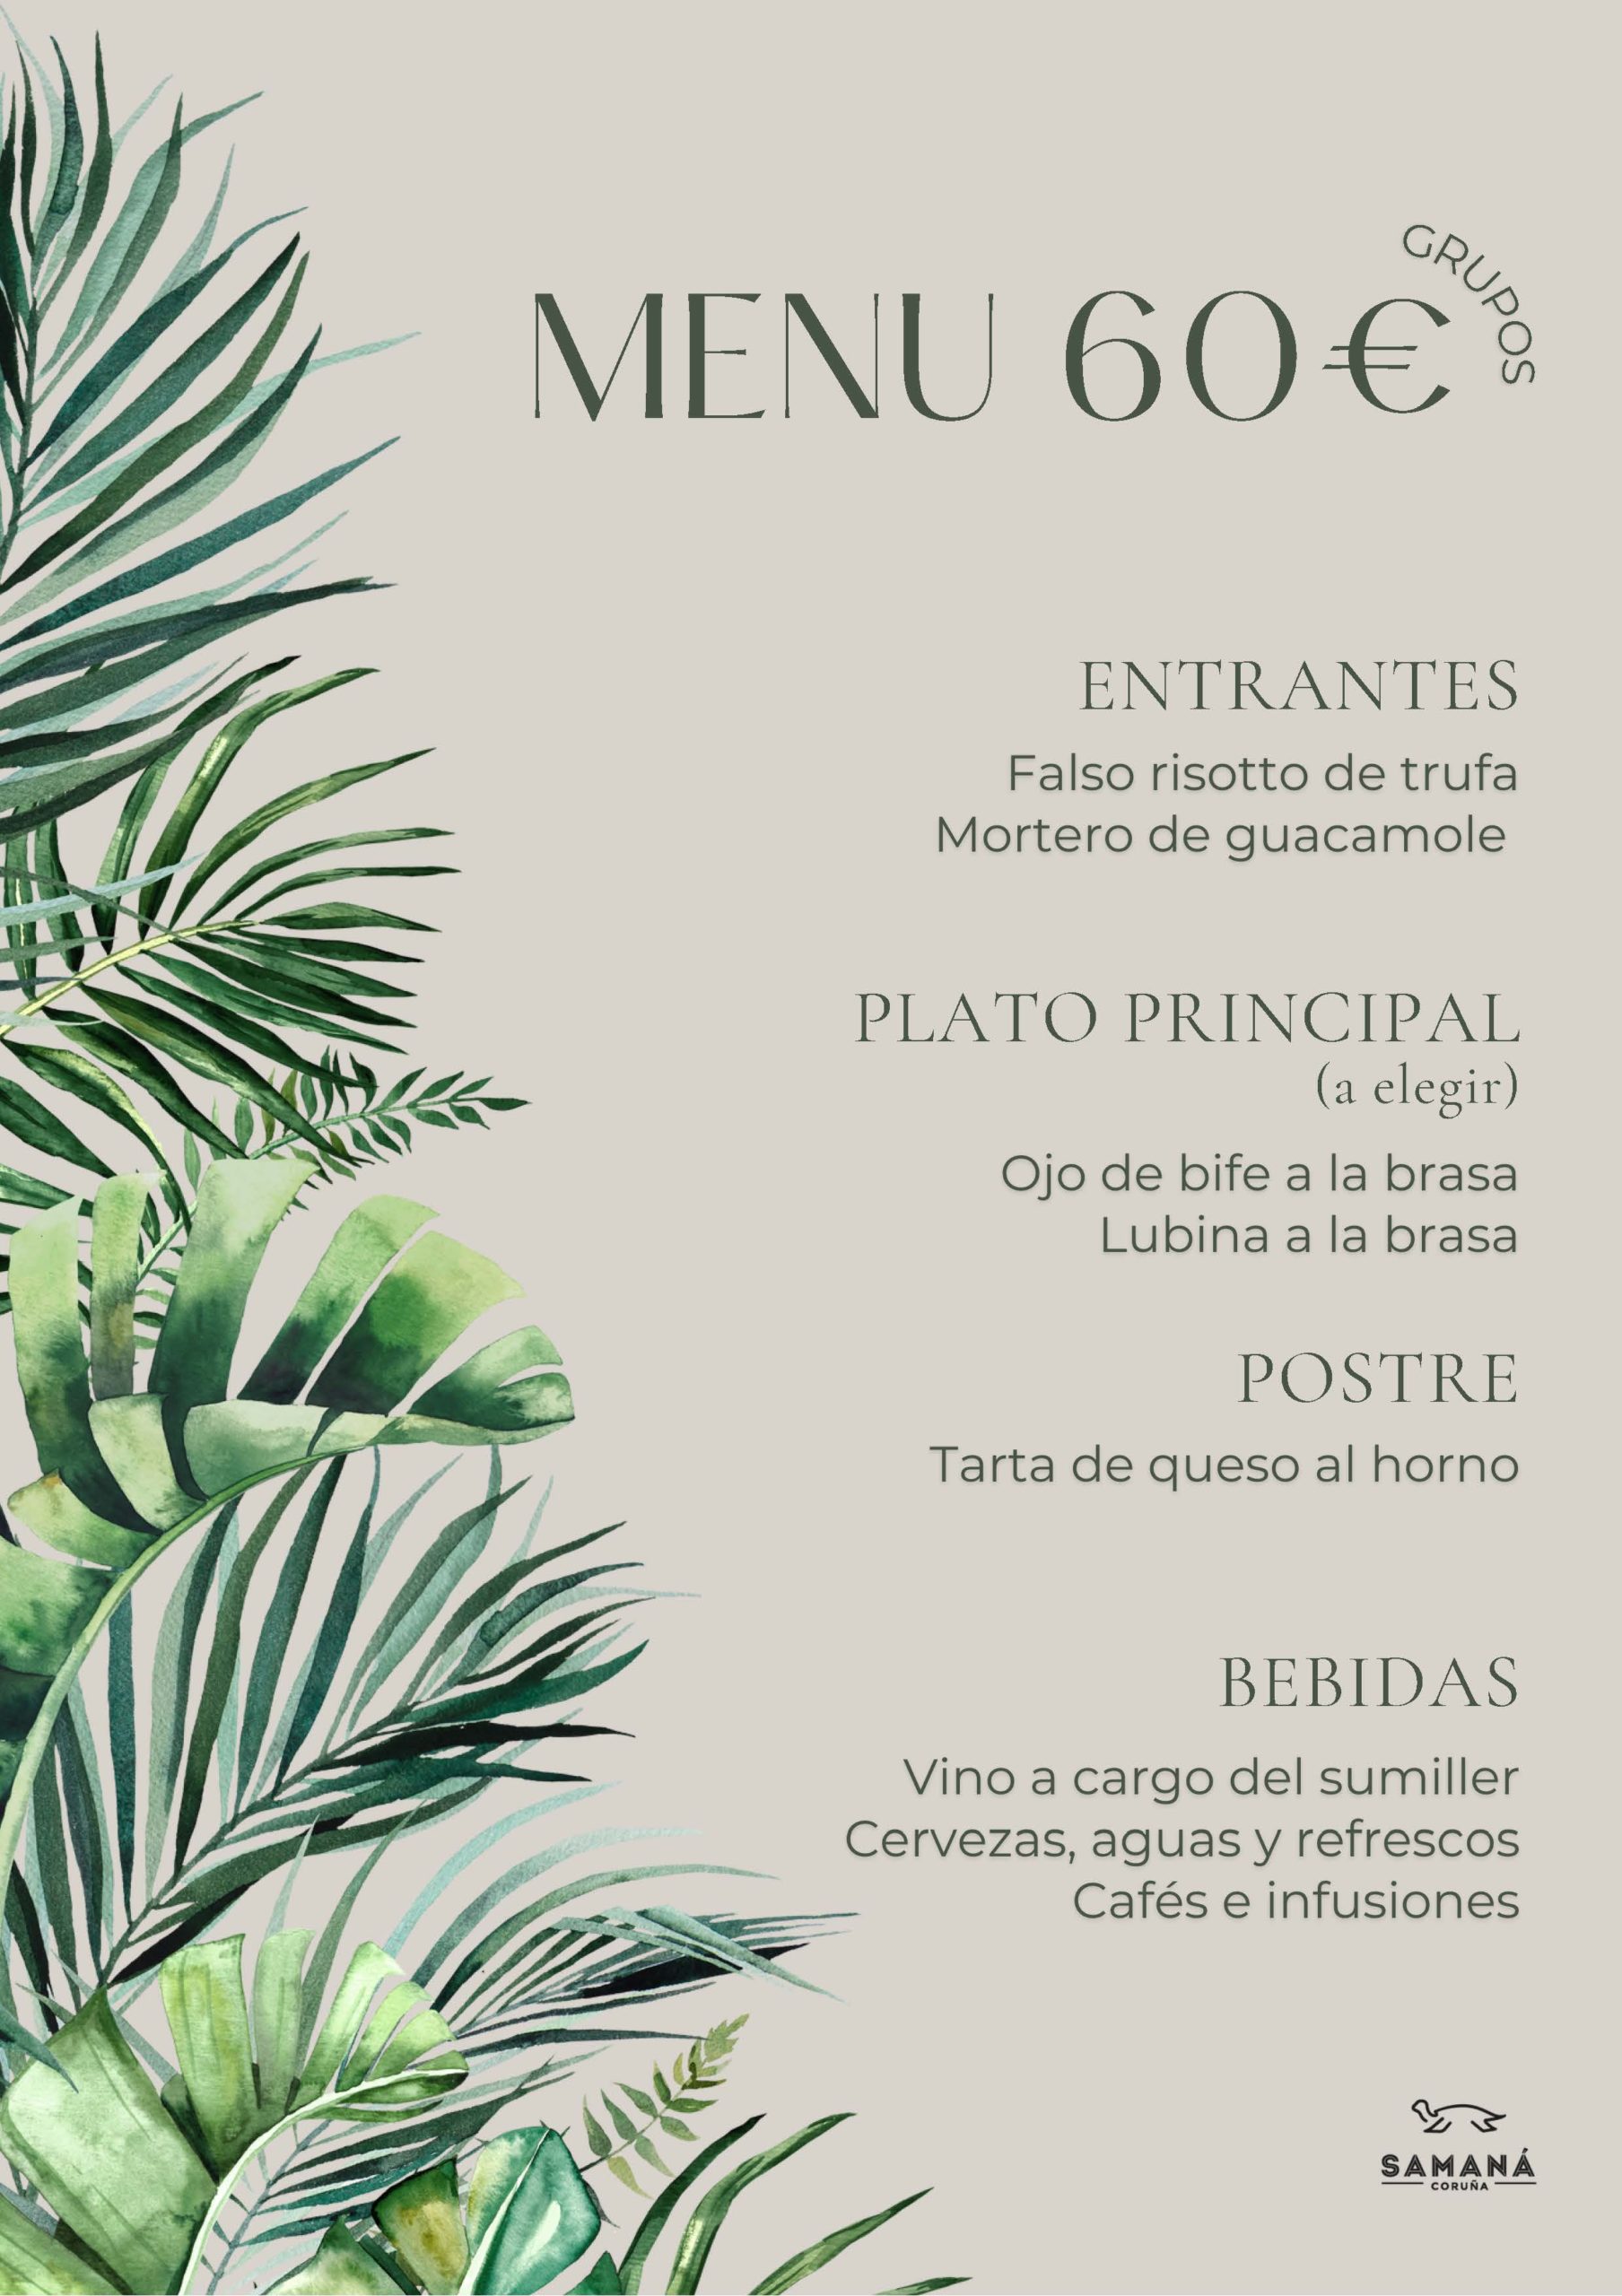 Restaurante Samaná Coruña menu para grupos 60€